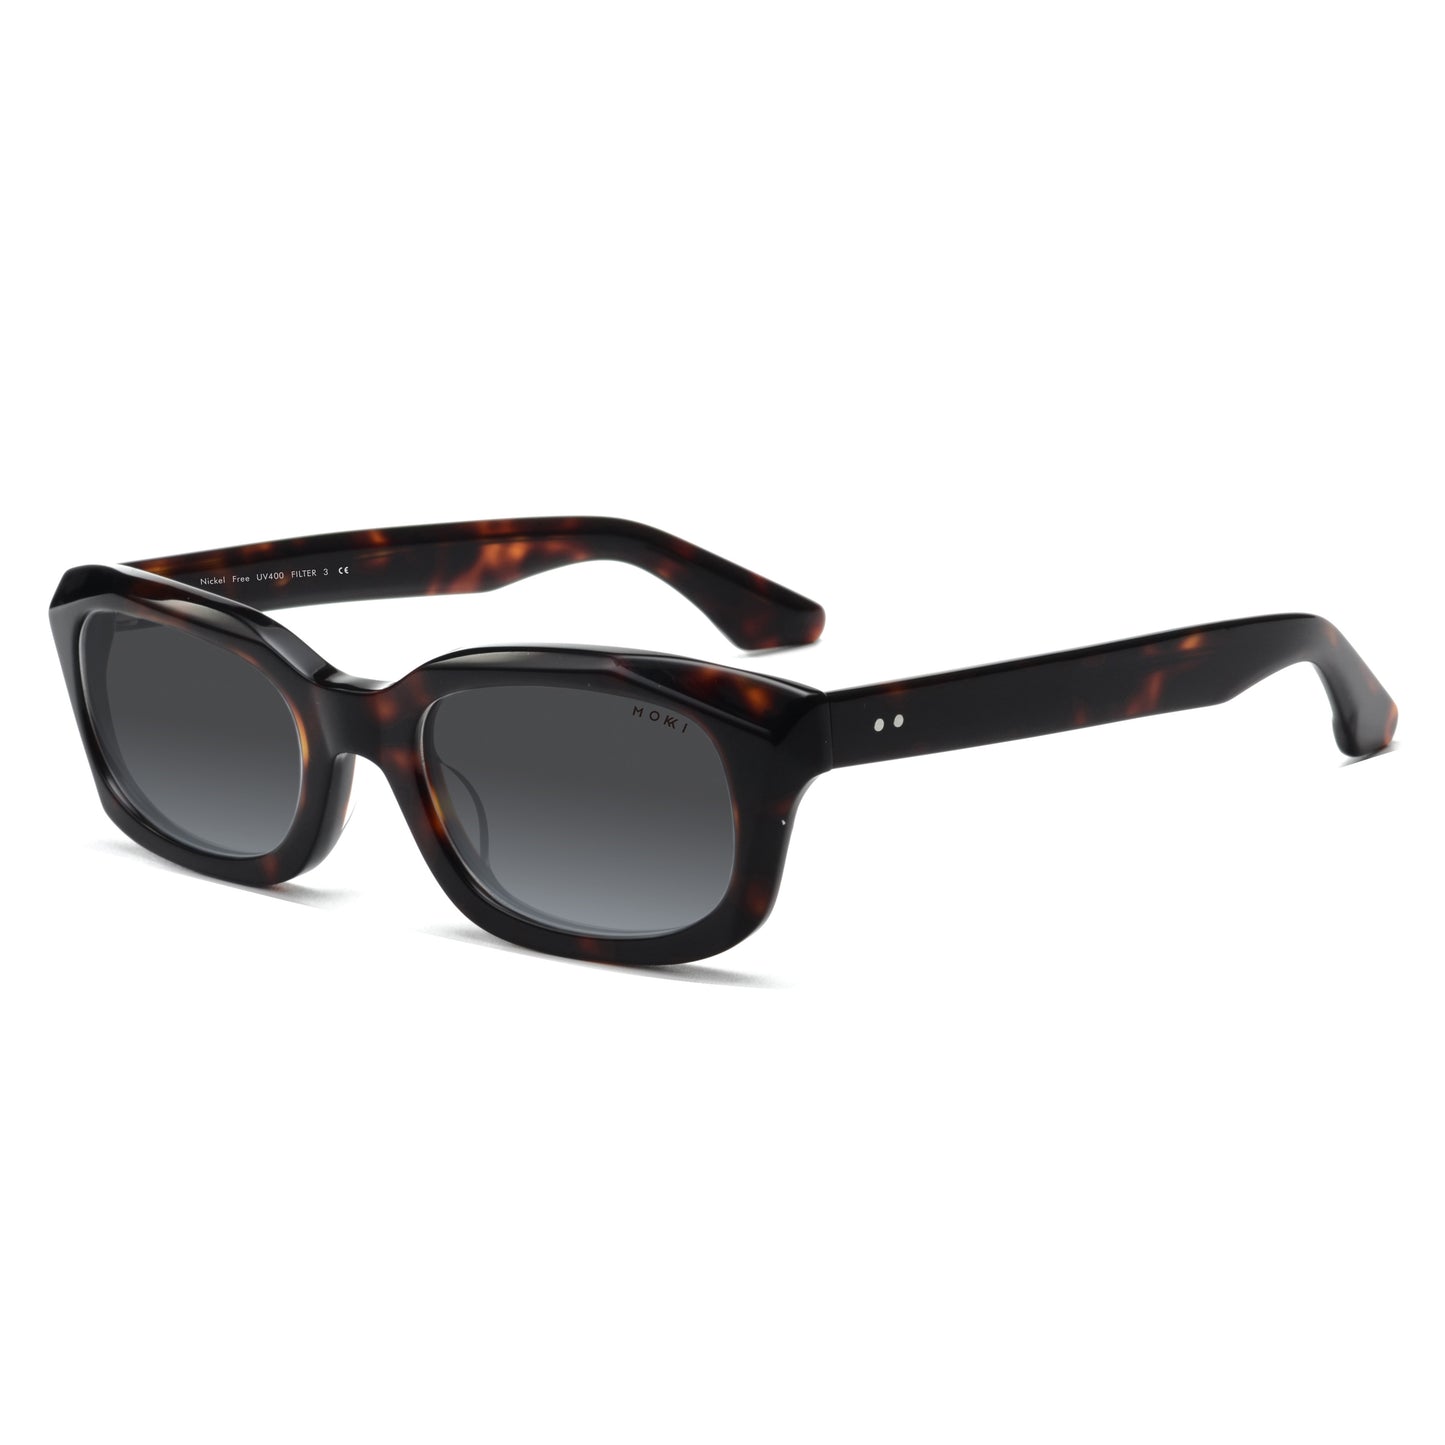 Mokki Slim Ovals sunglasses in pattern